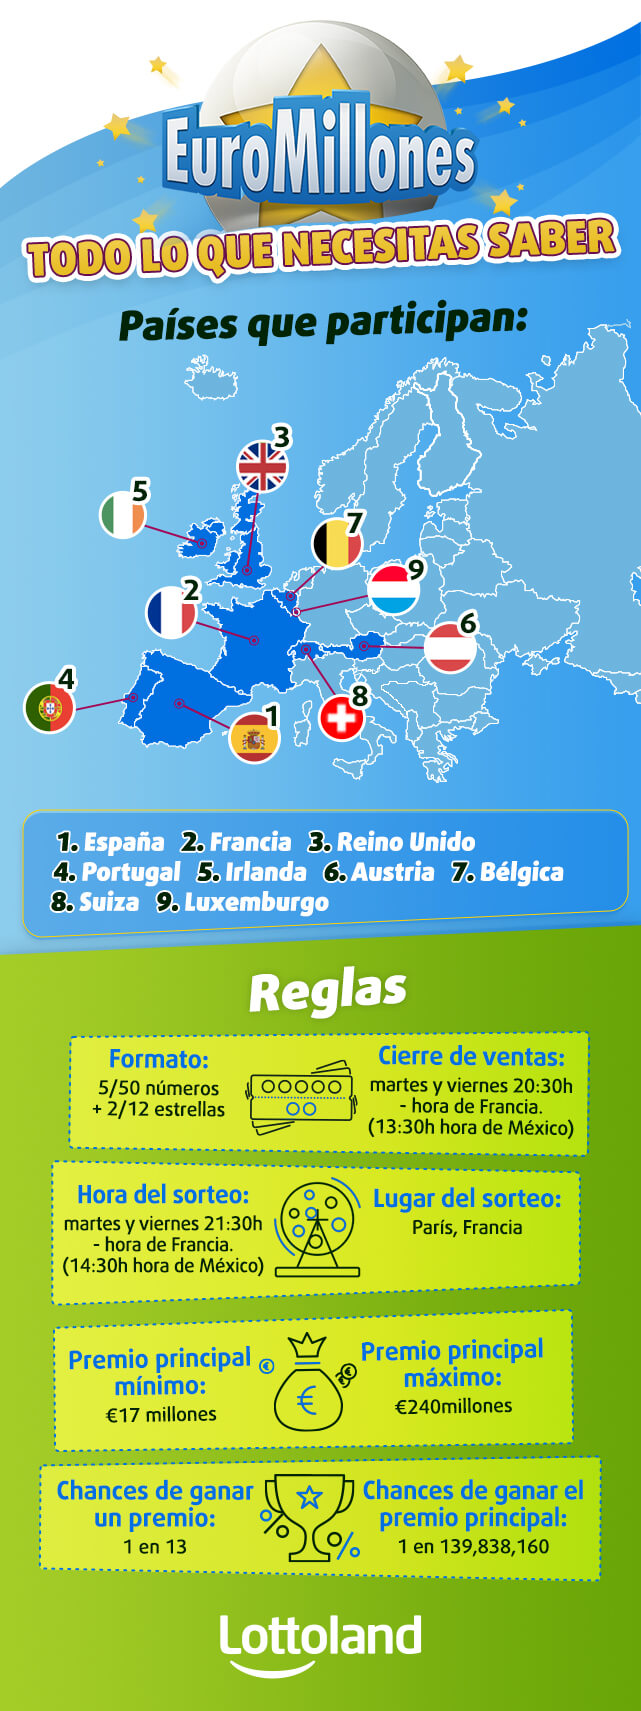 Infografia sobre las reglas del EuroMillones